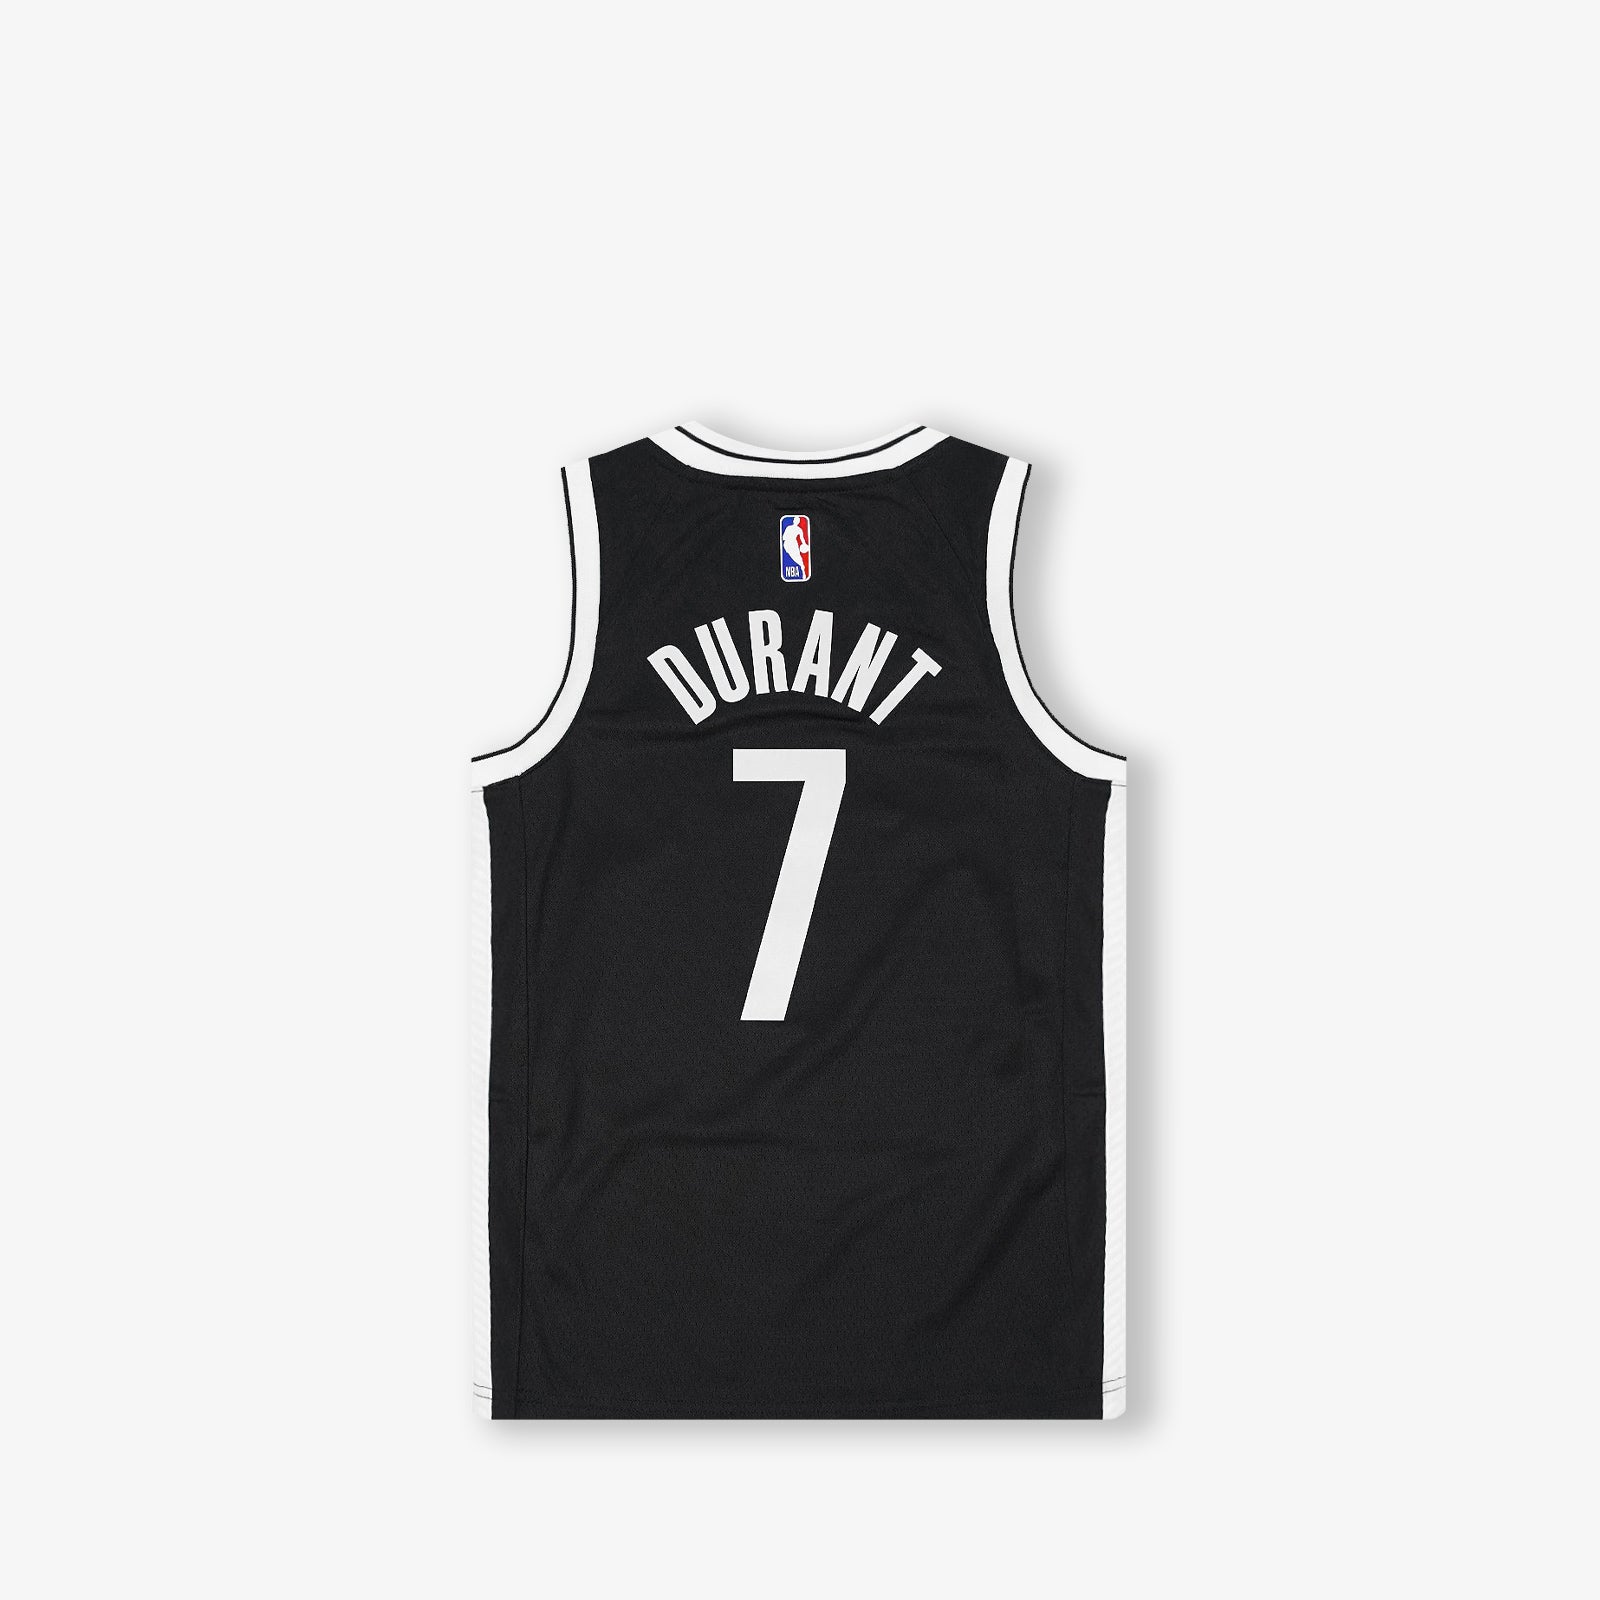 Kevin Durant Brooklyn Nets NBA Jerseys for sale